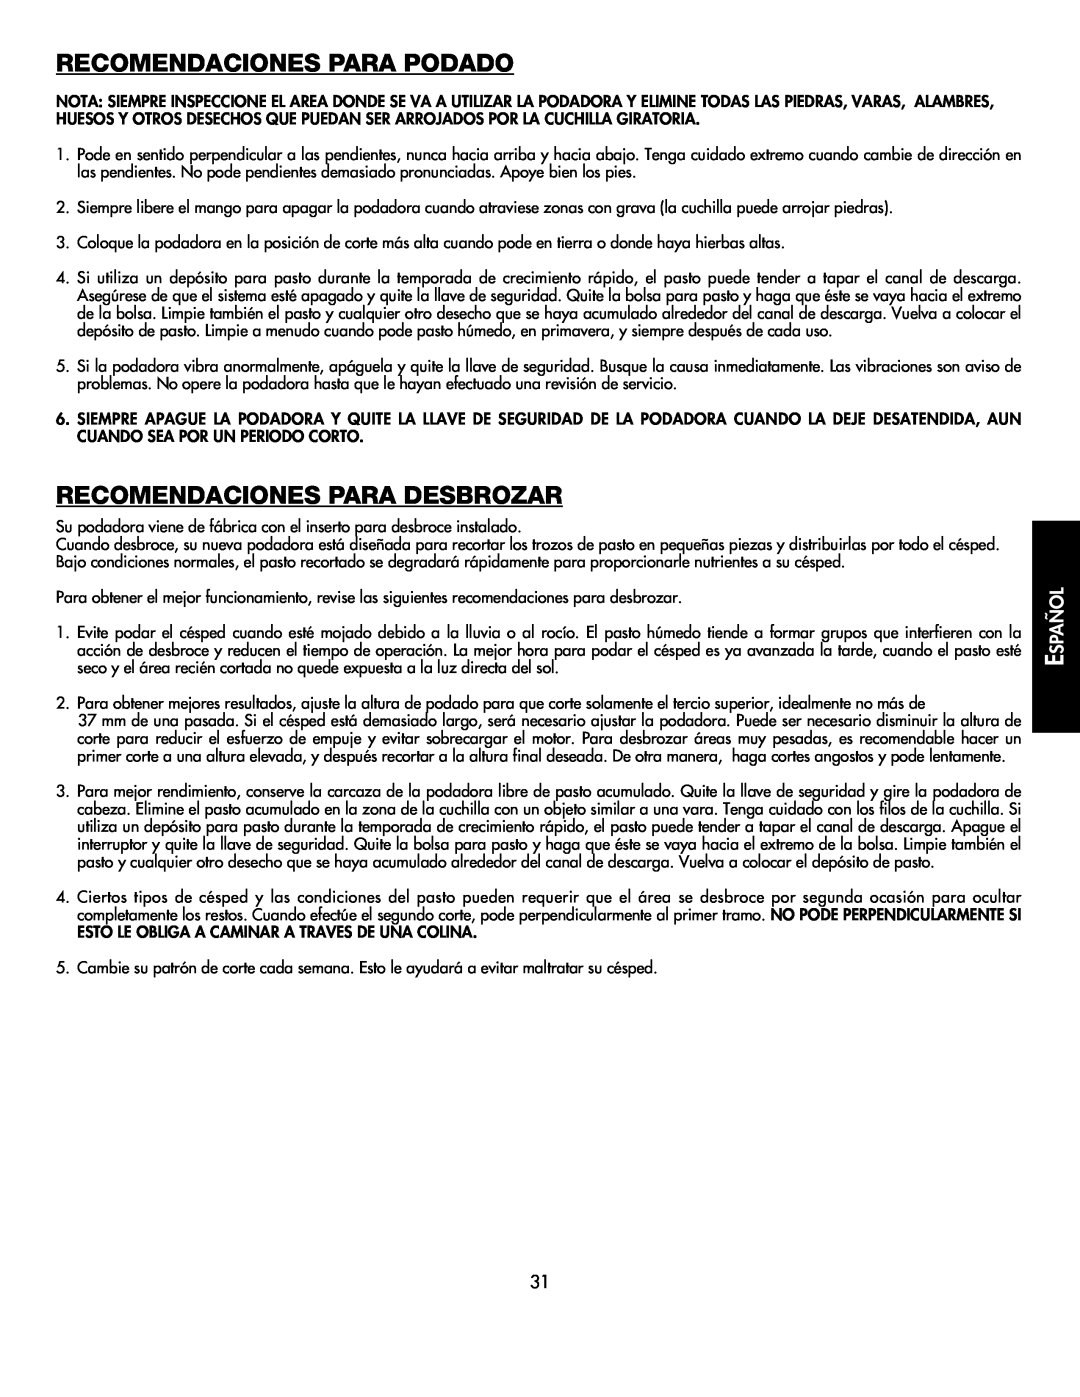 Black & Decker CMM1000 instruction manual Recomendaciones Para Podado, Recomendaciones Para Desbrozar, Español 